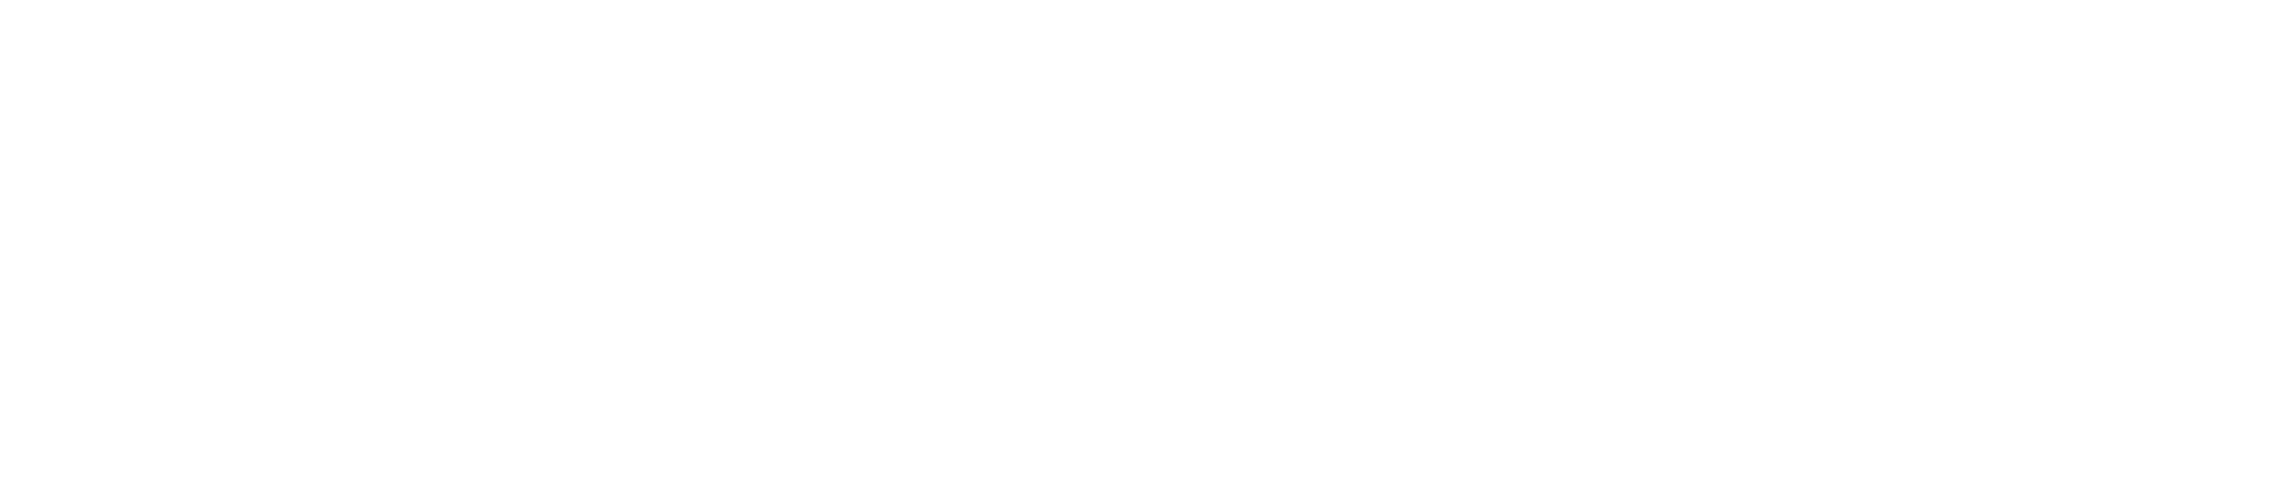 Focus Forward Media